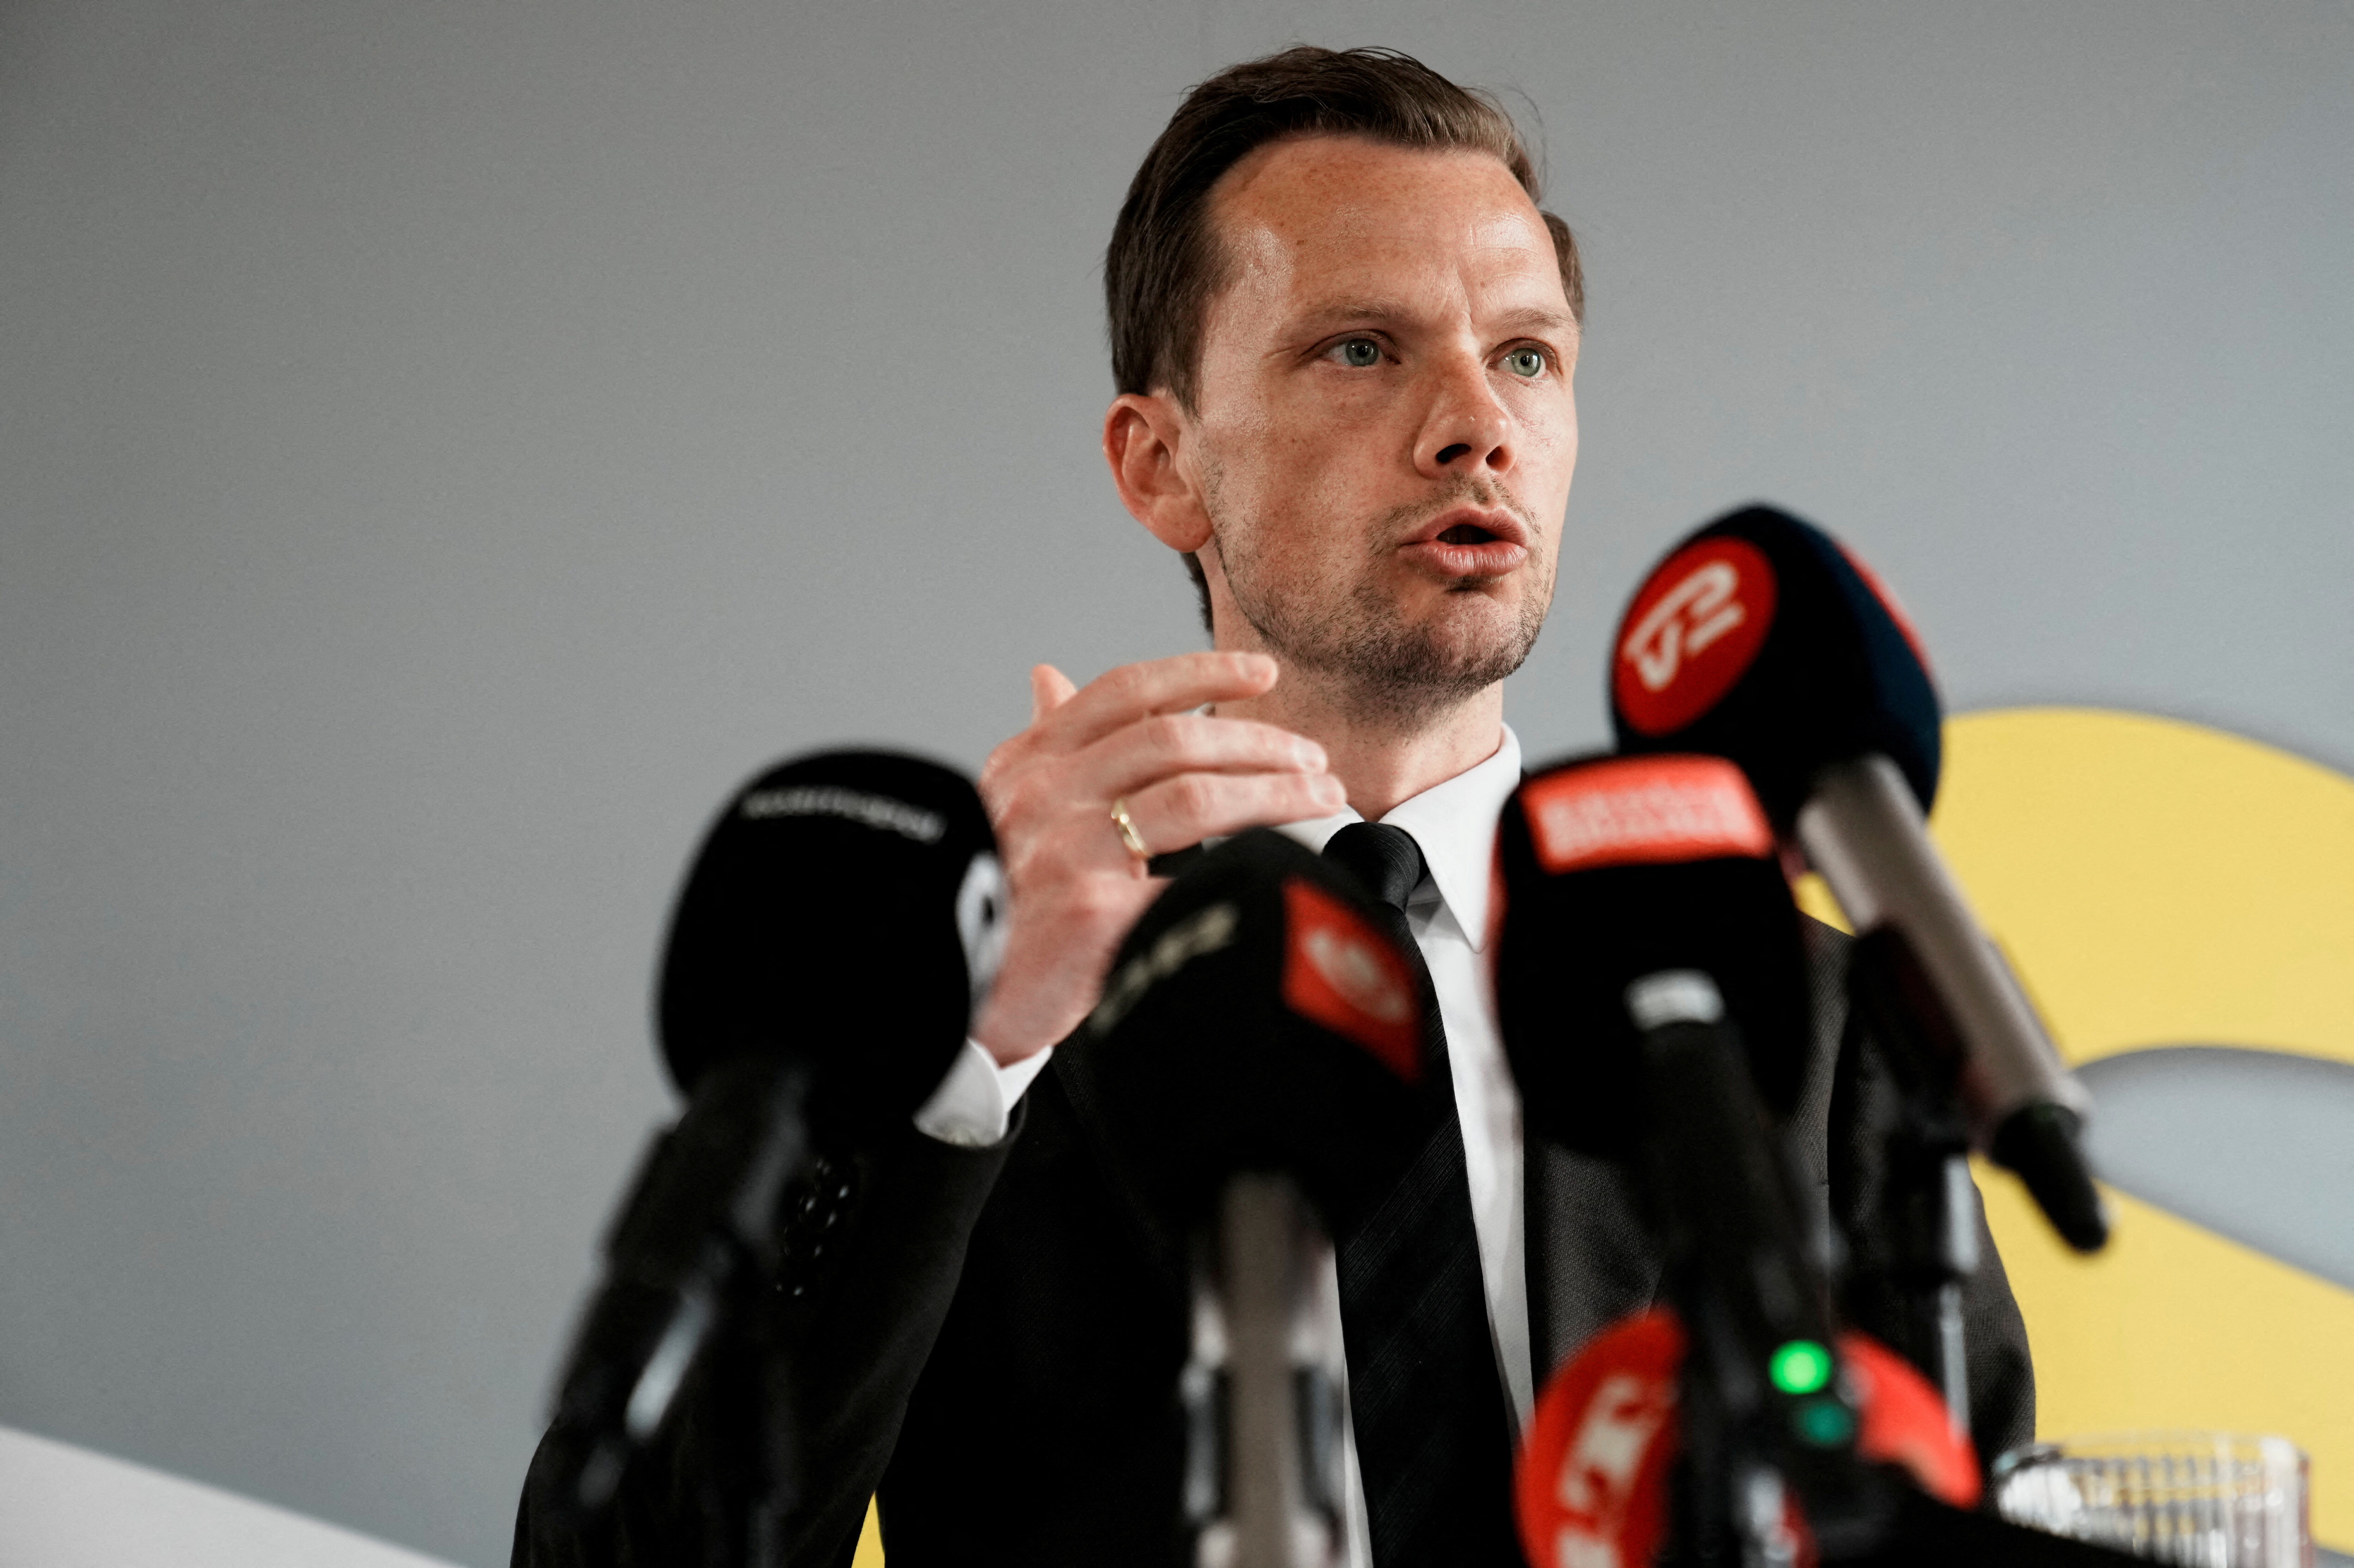 Danish Justice Minister Hummelgaard attends press conference in Copenhagen